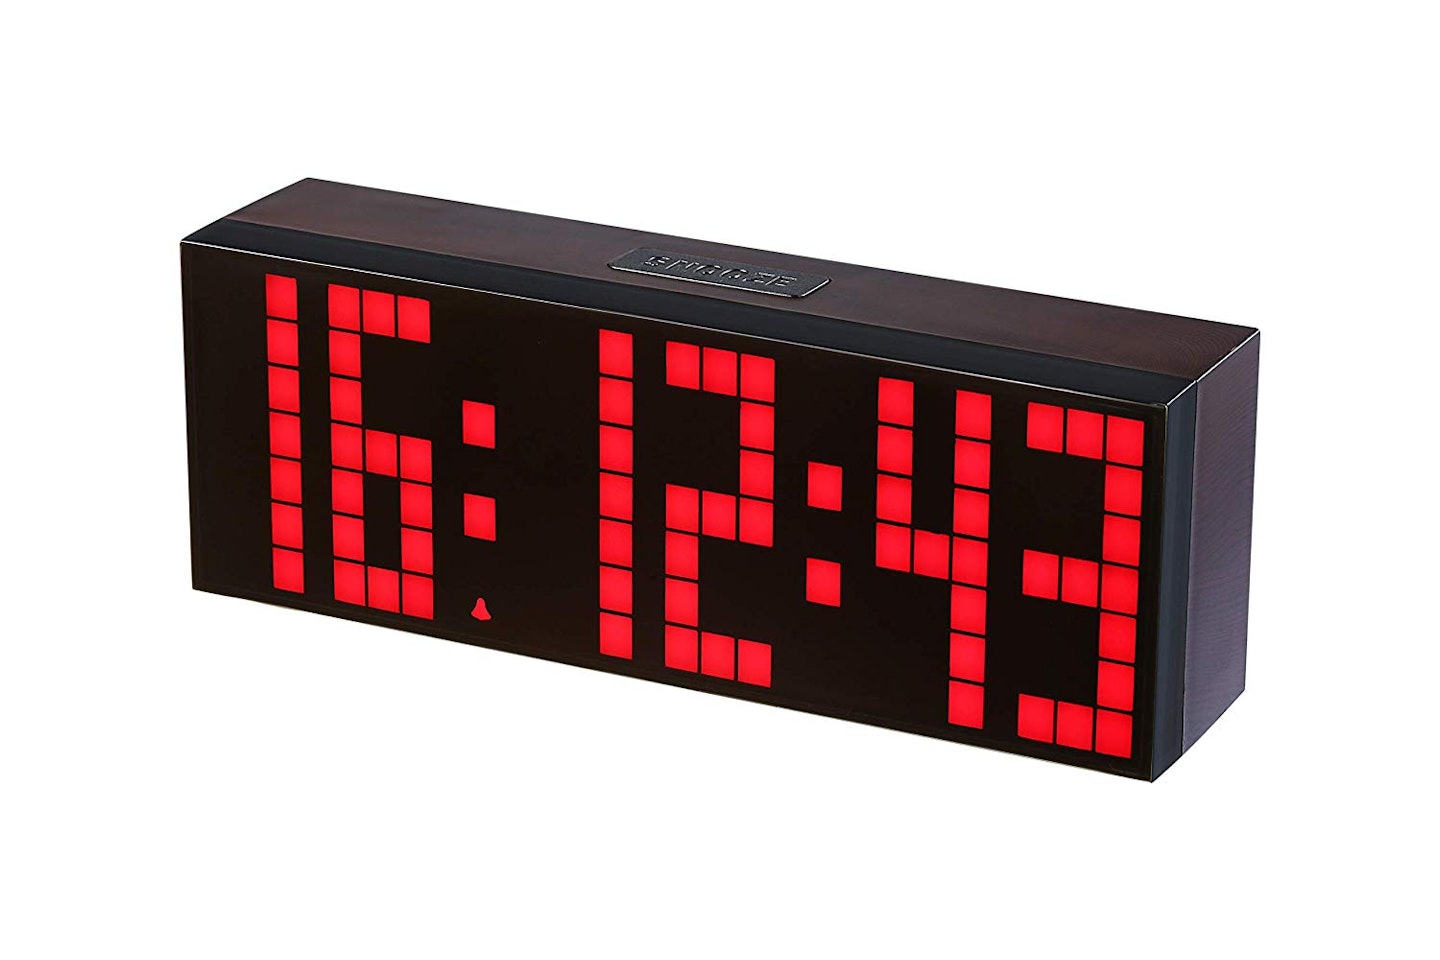 Bestland Digital Large Big Jumbo LED Clock, £25.99